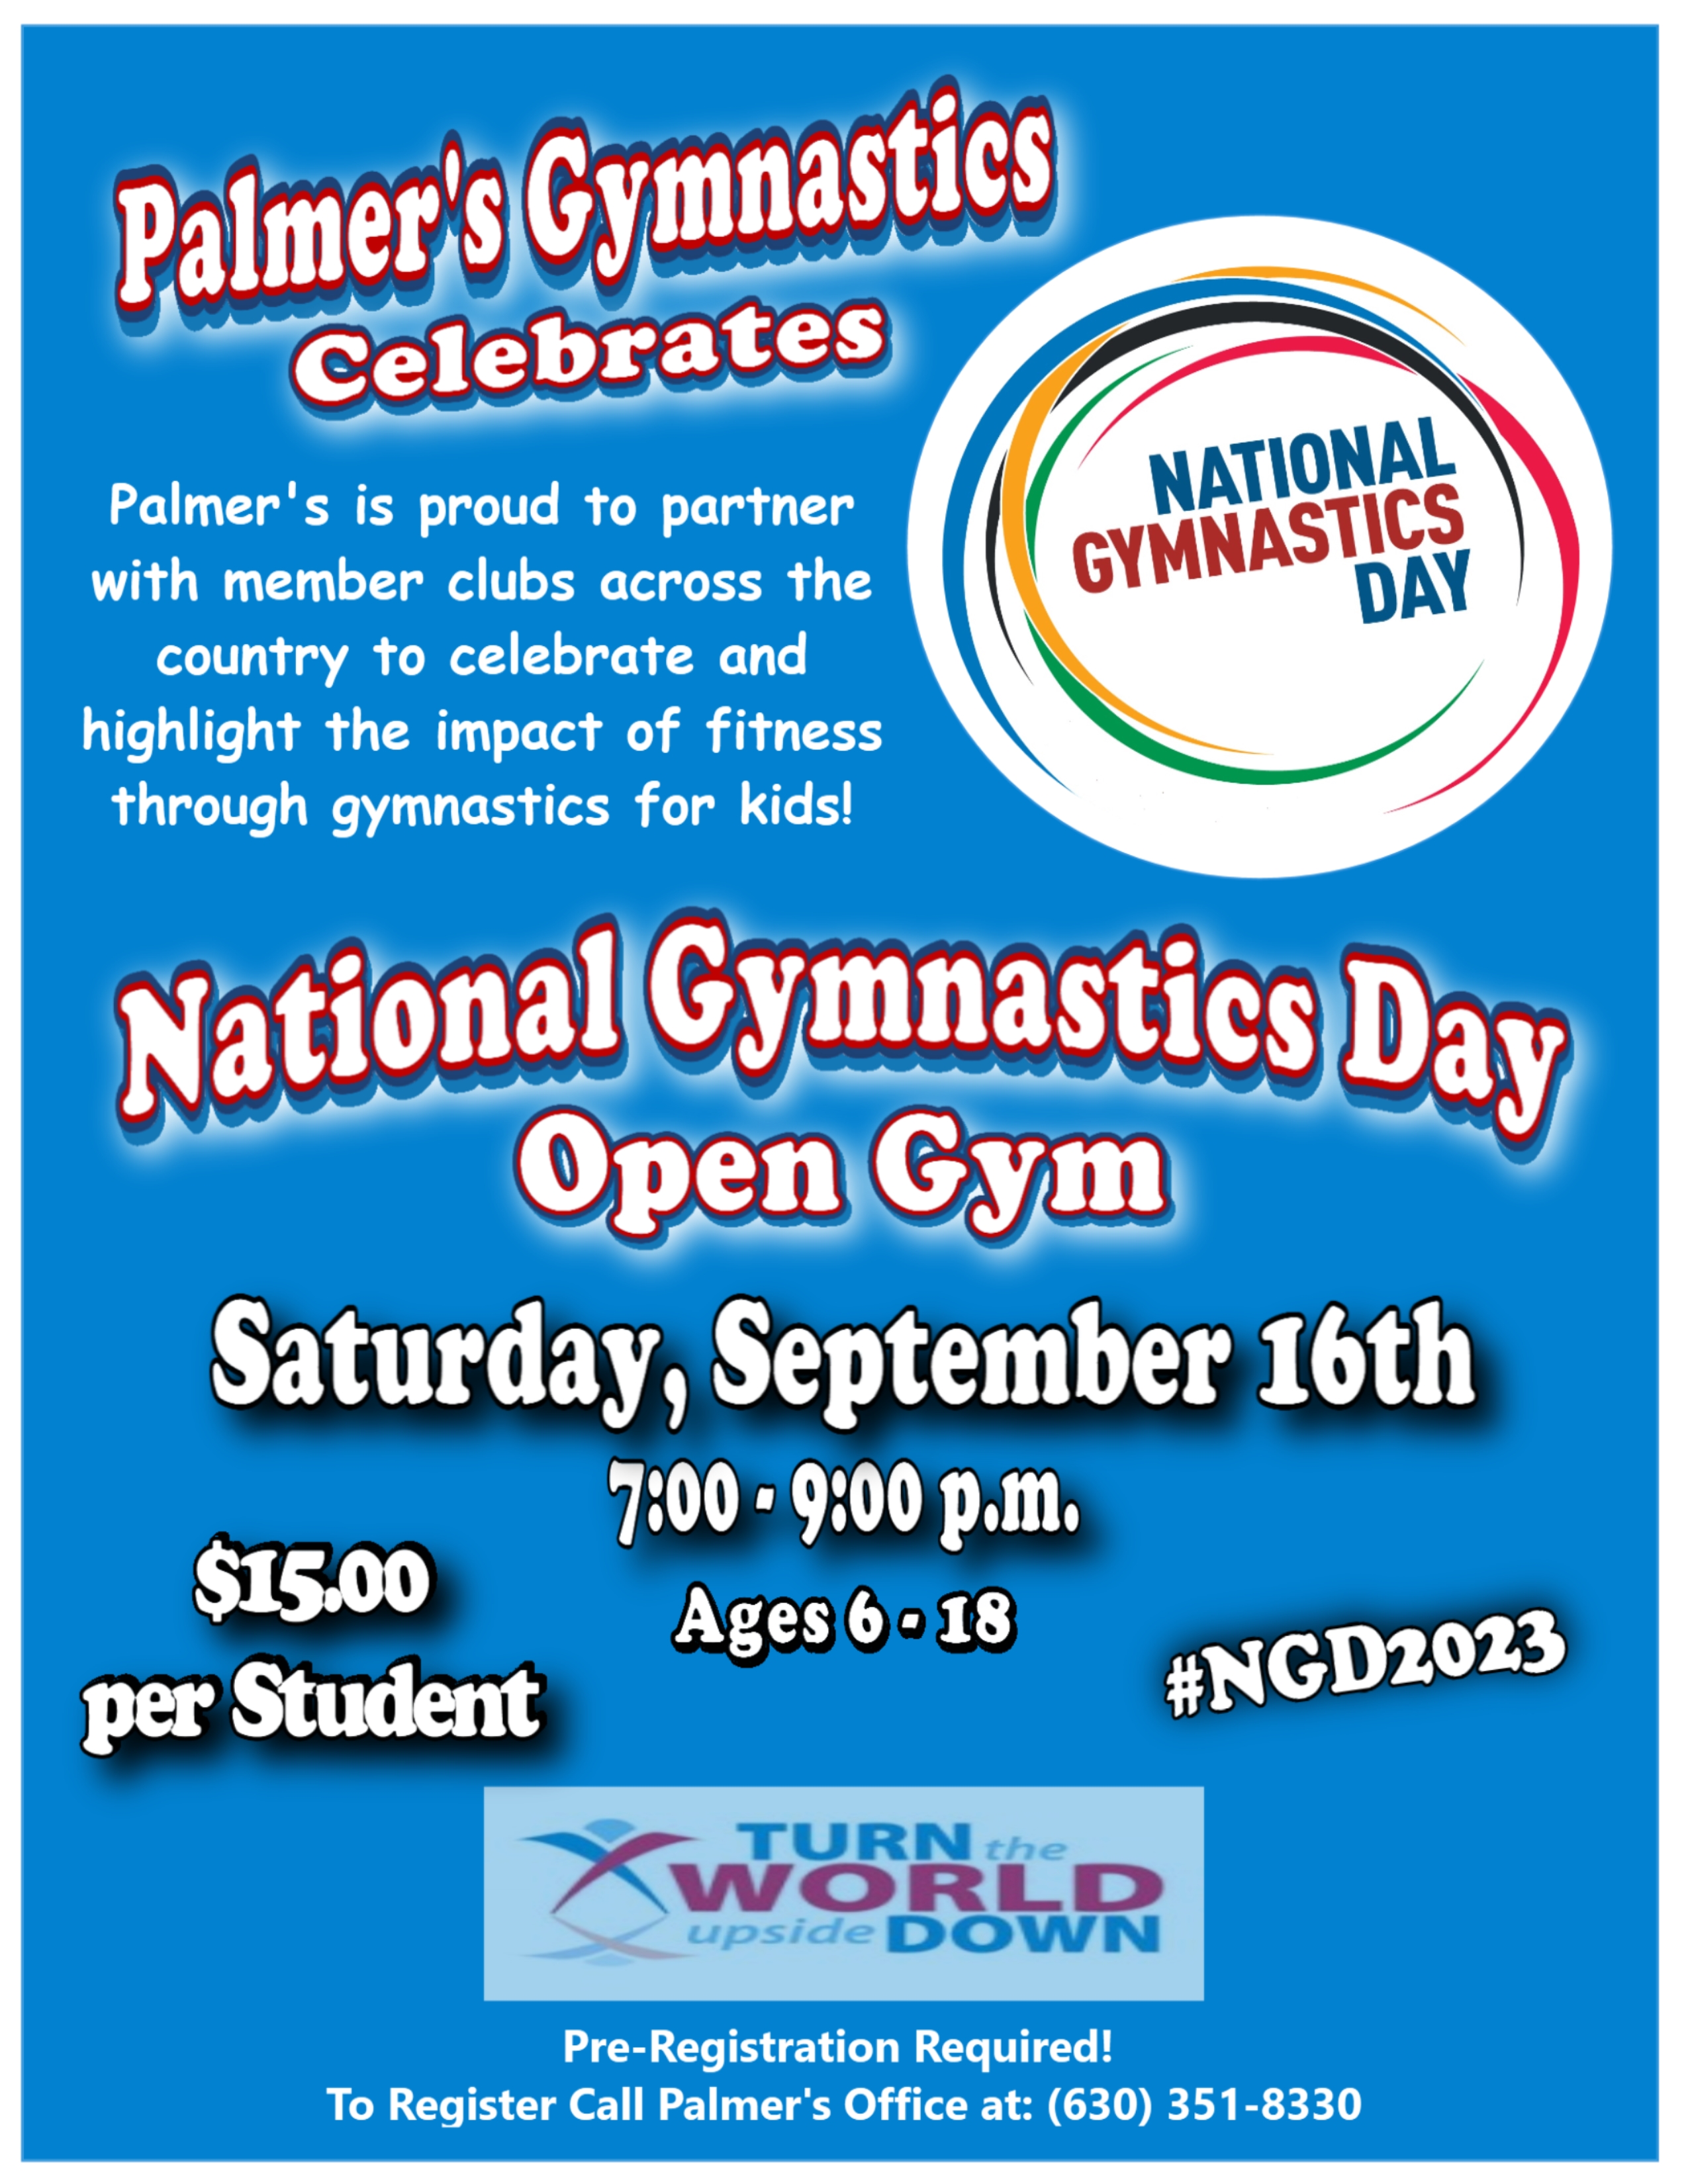 National Gymnastics Day Open Gym Sept. 16th